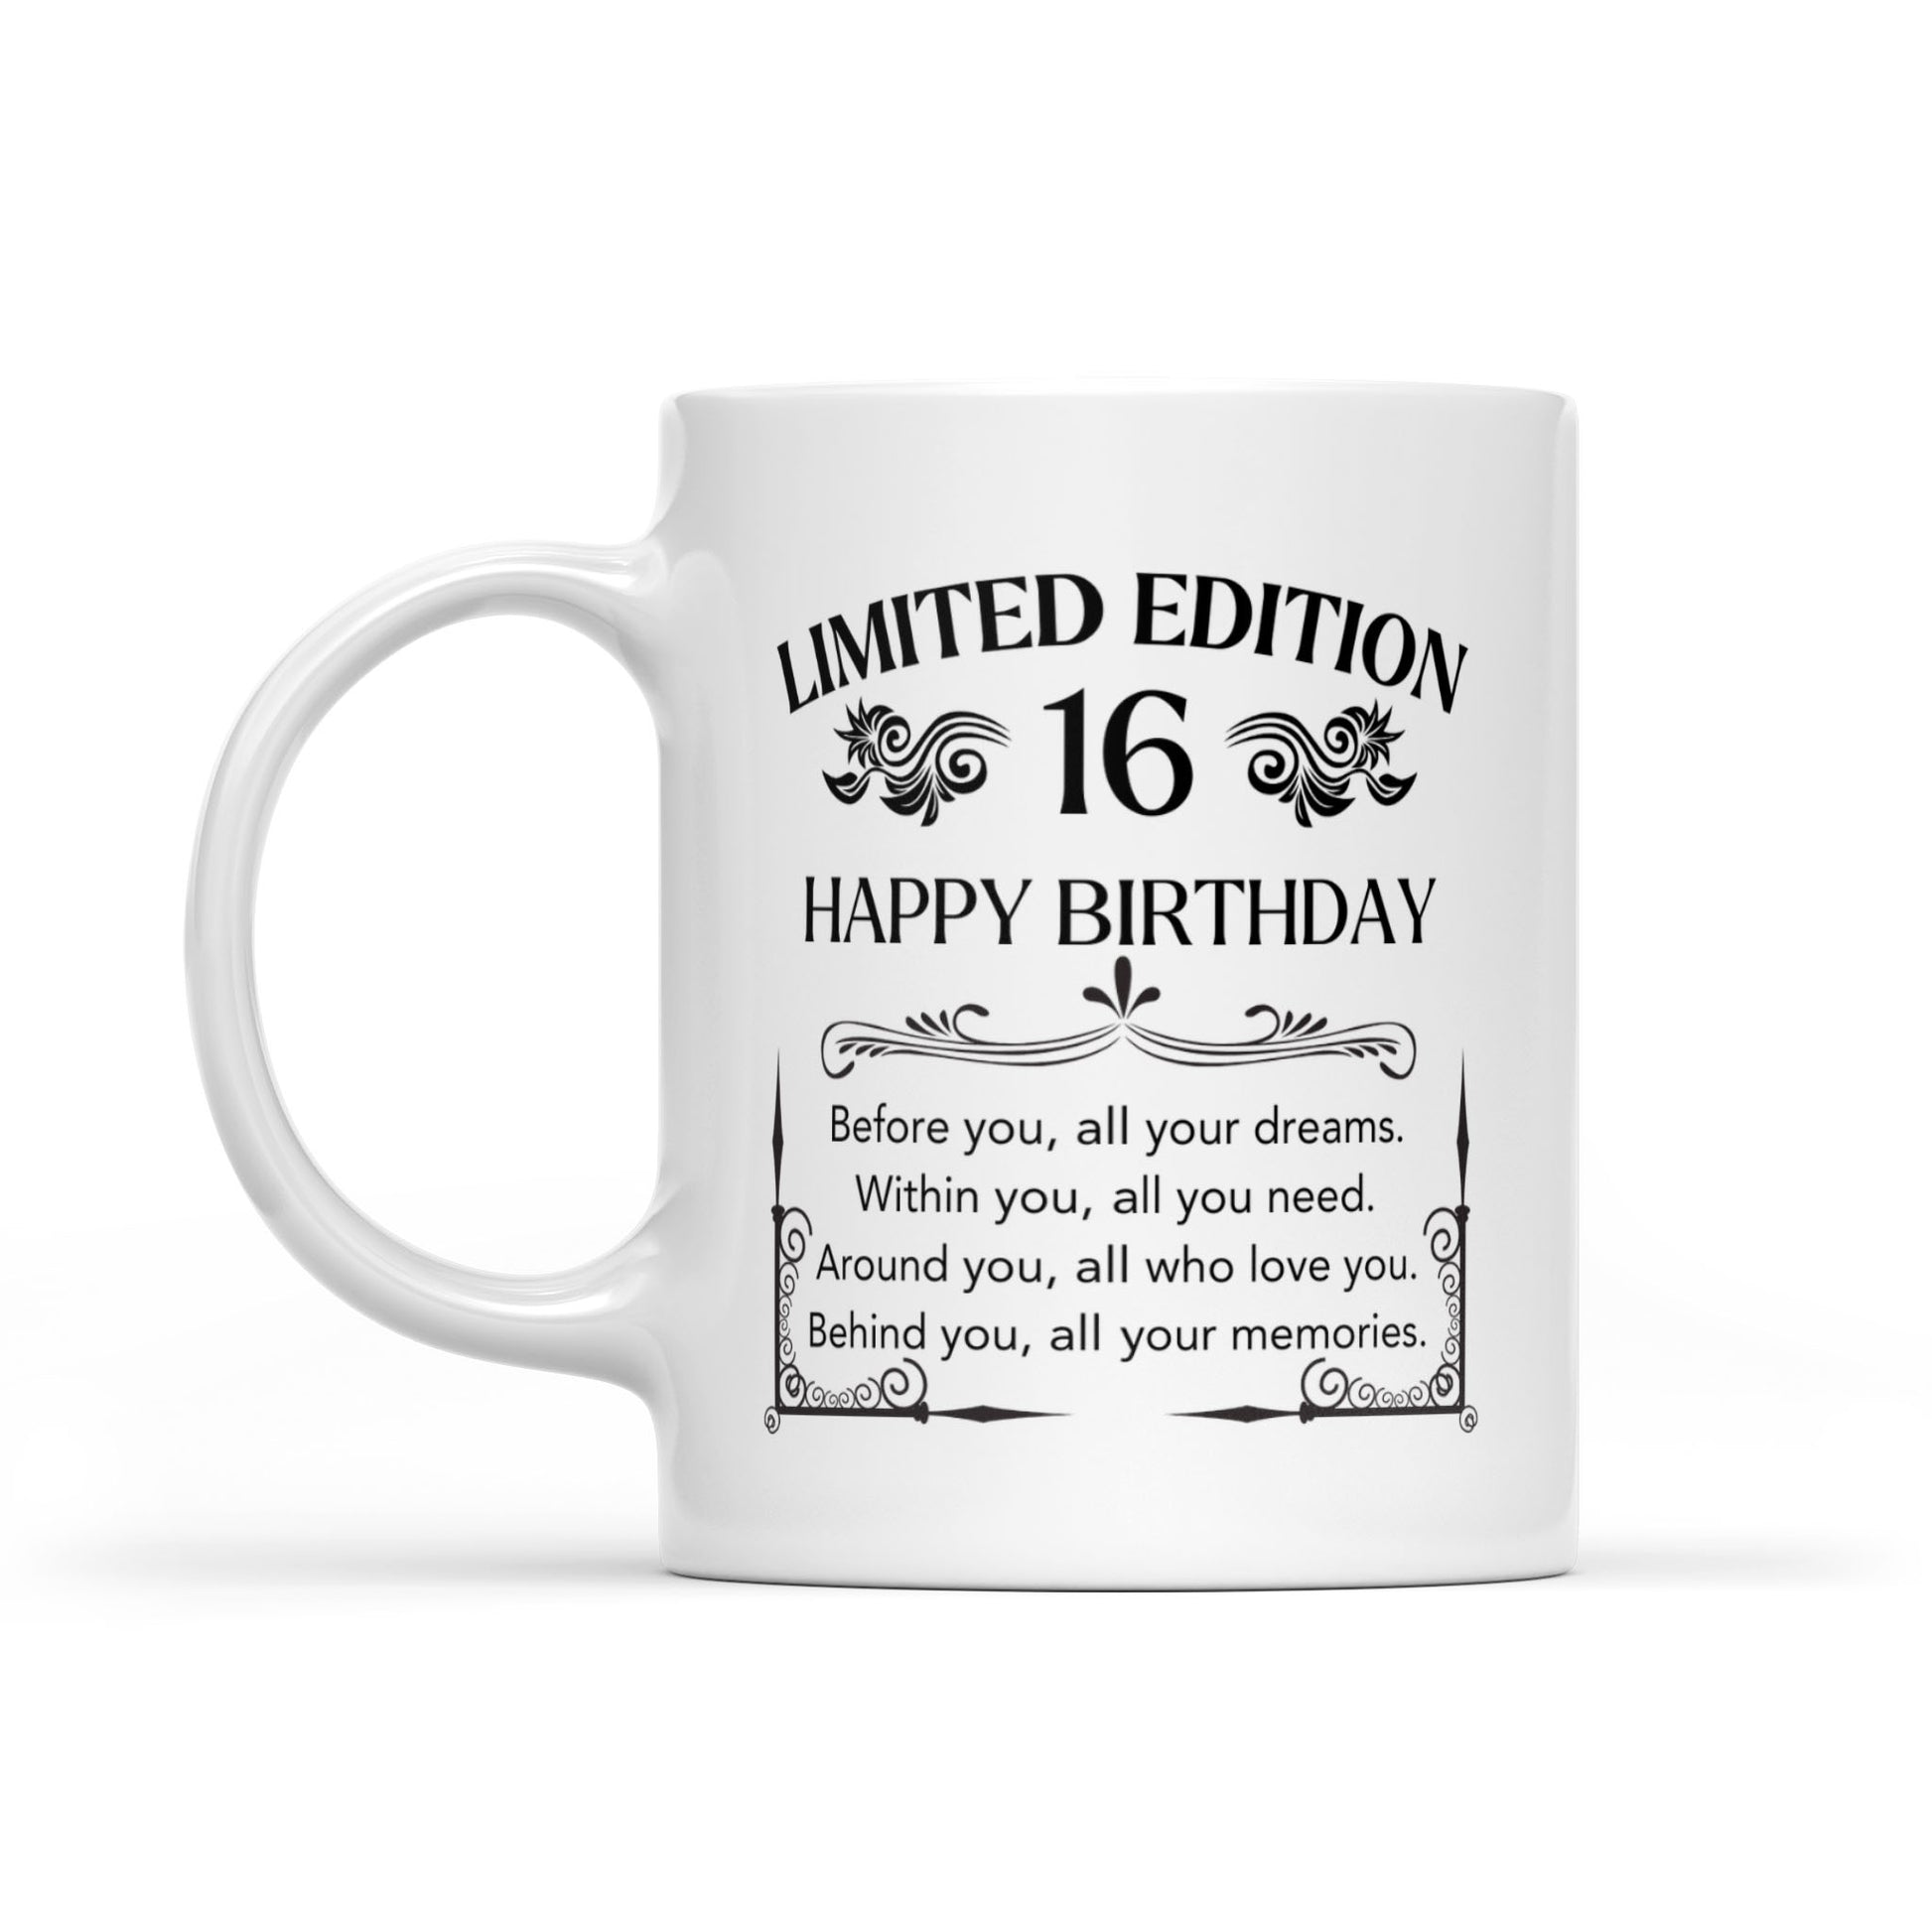 16th birthday gift mug for her